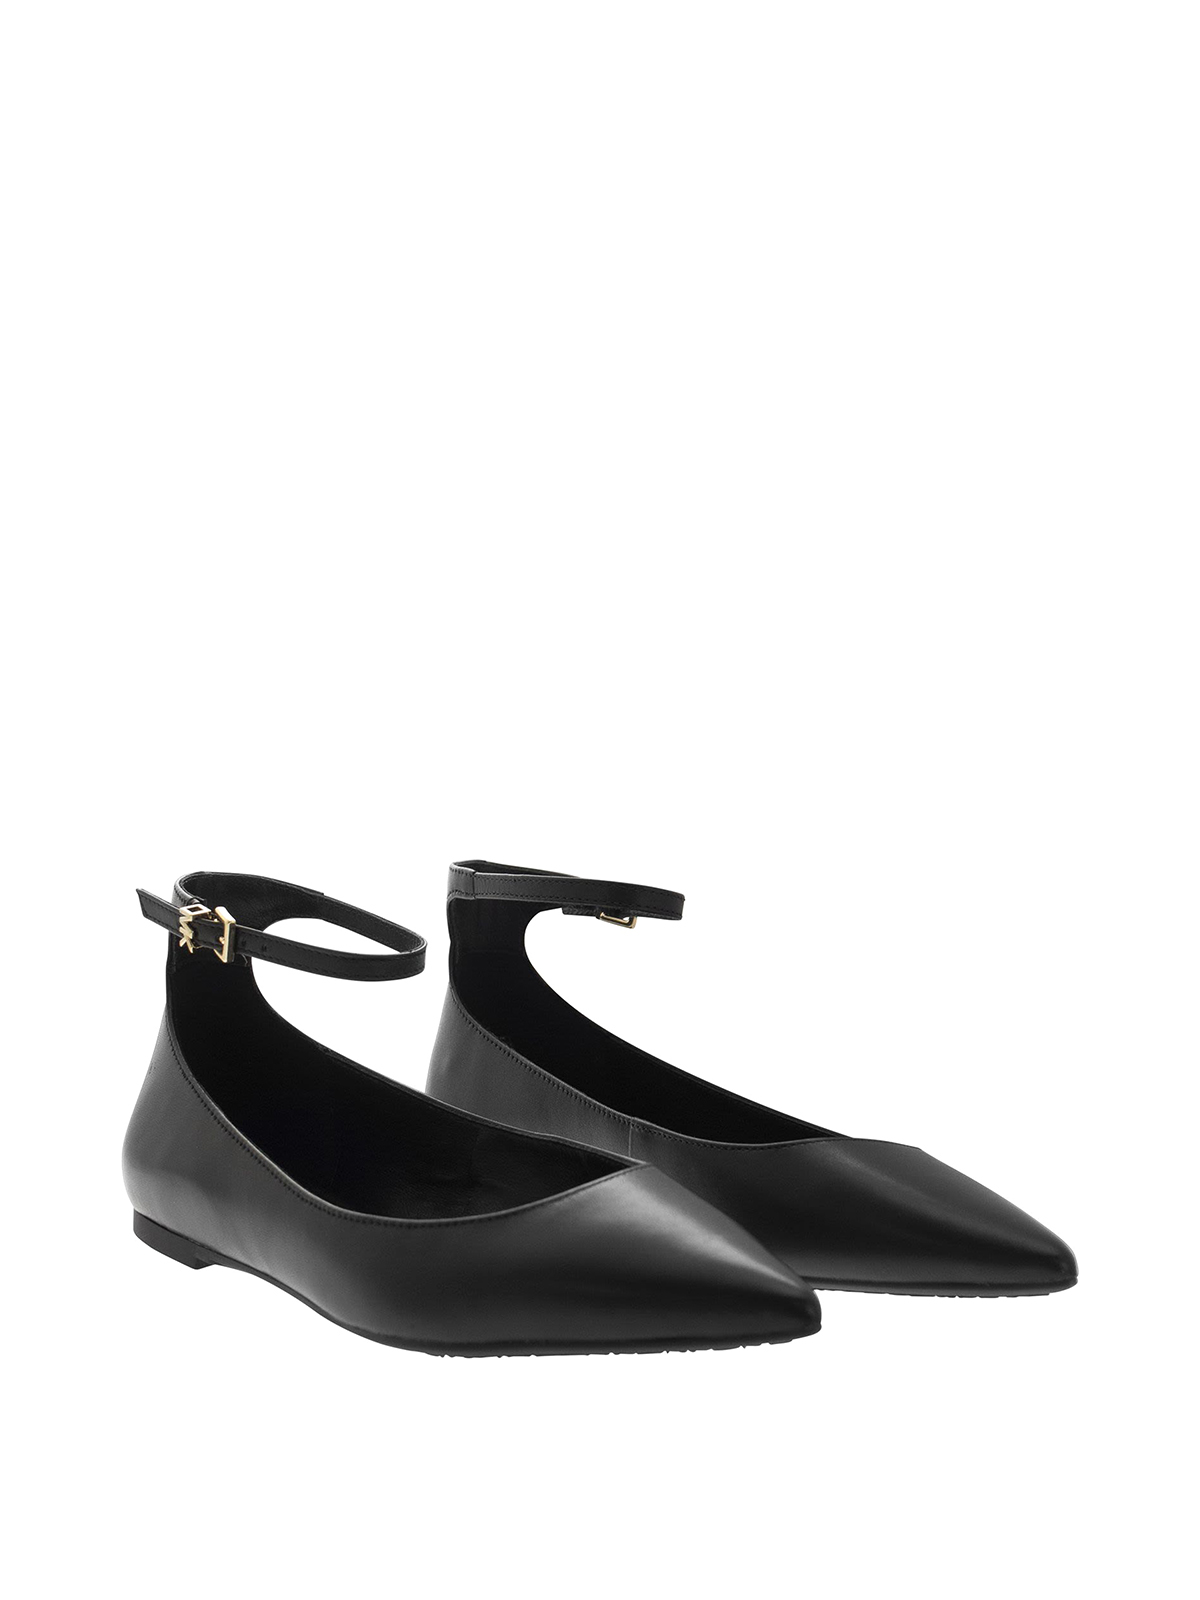 Womens Shoes Flats and flat shoes Flat sandals MICHAEL Michael Kors Sandals in Black 